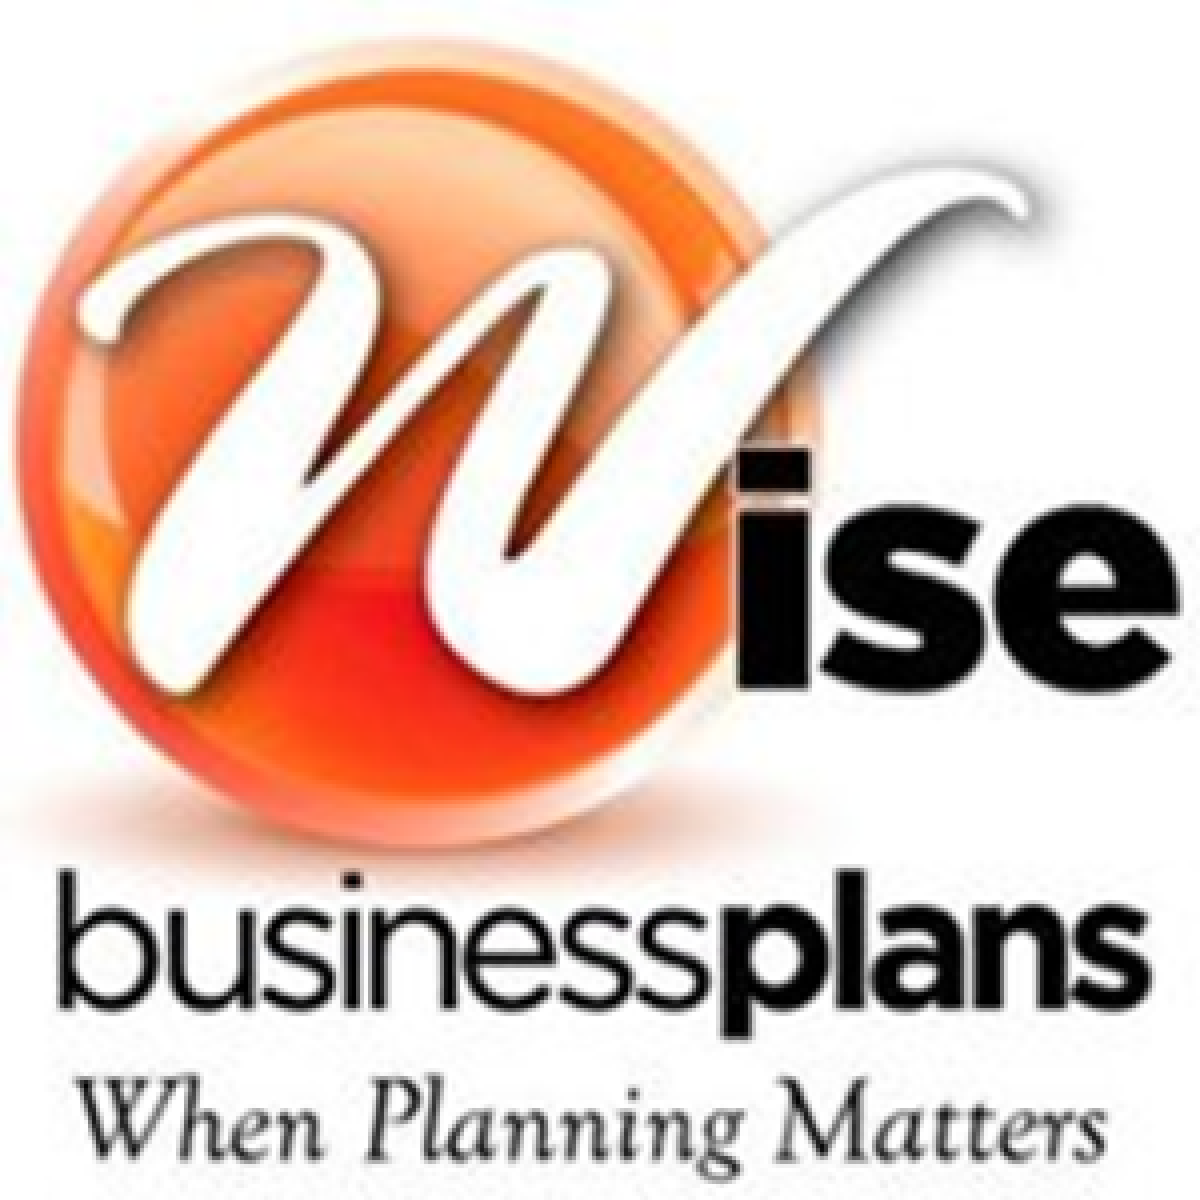 wise business plans.com